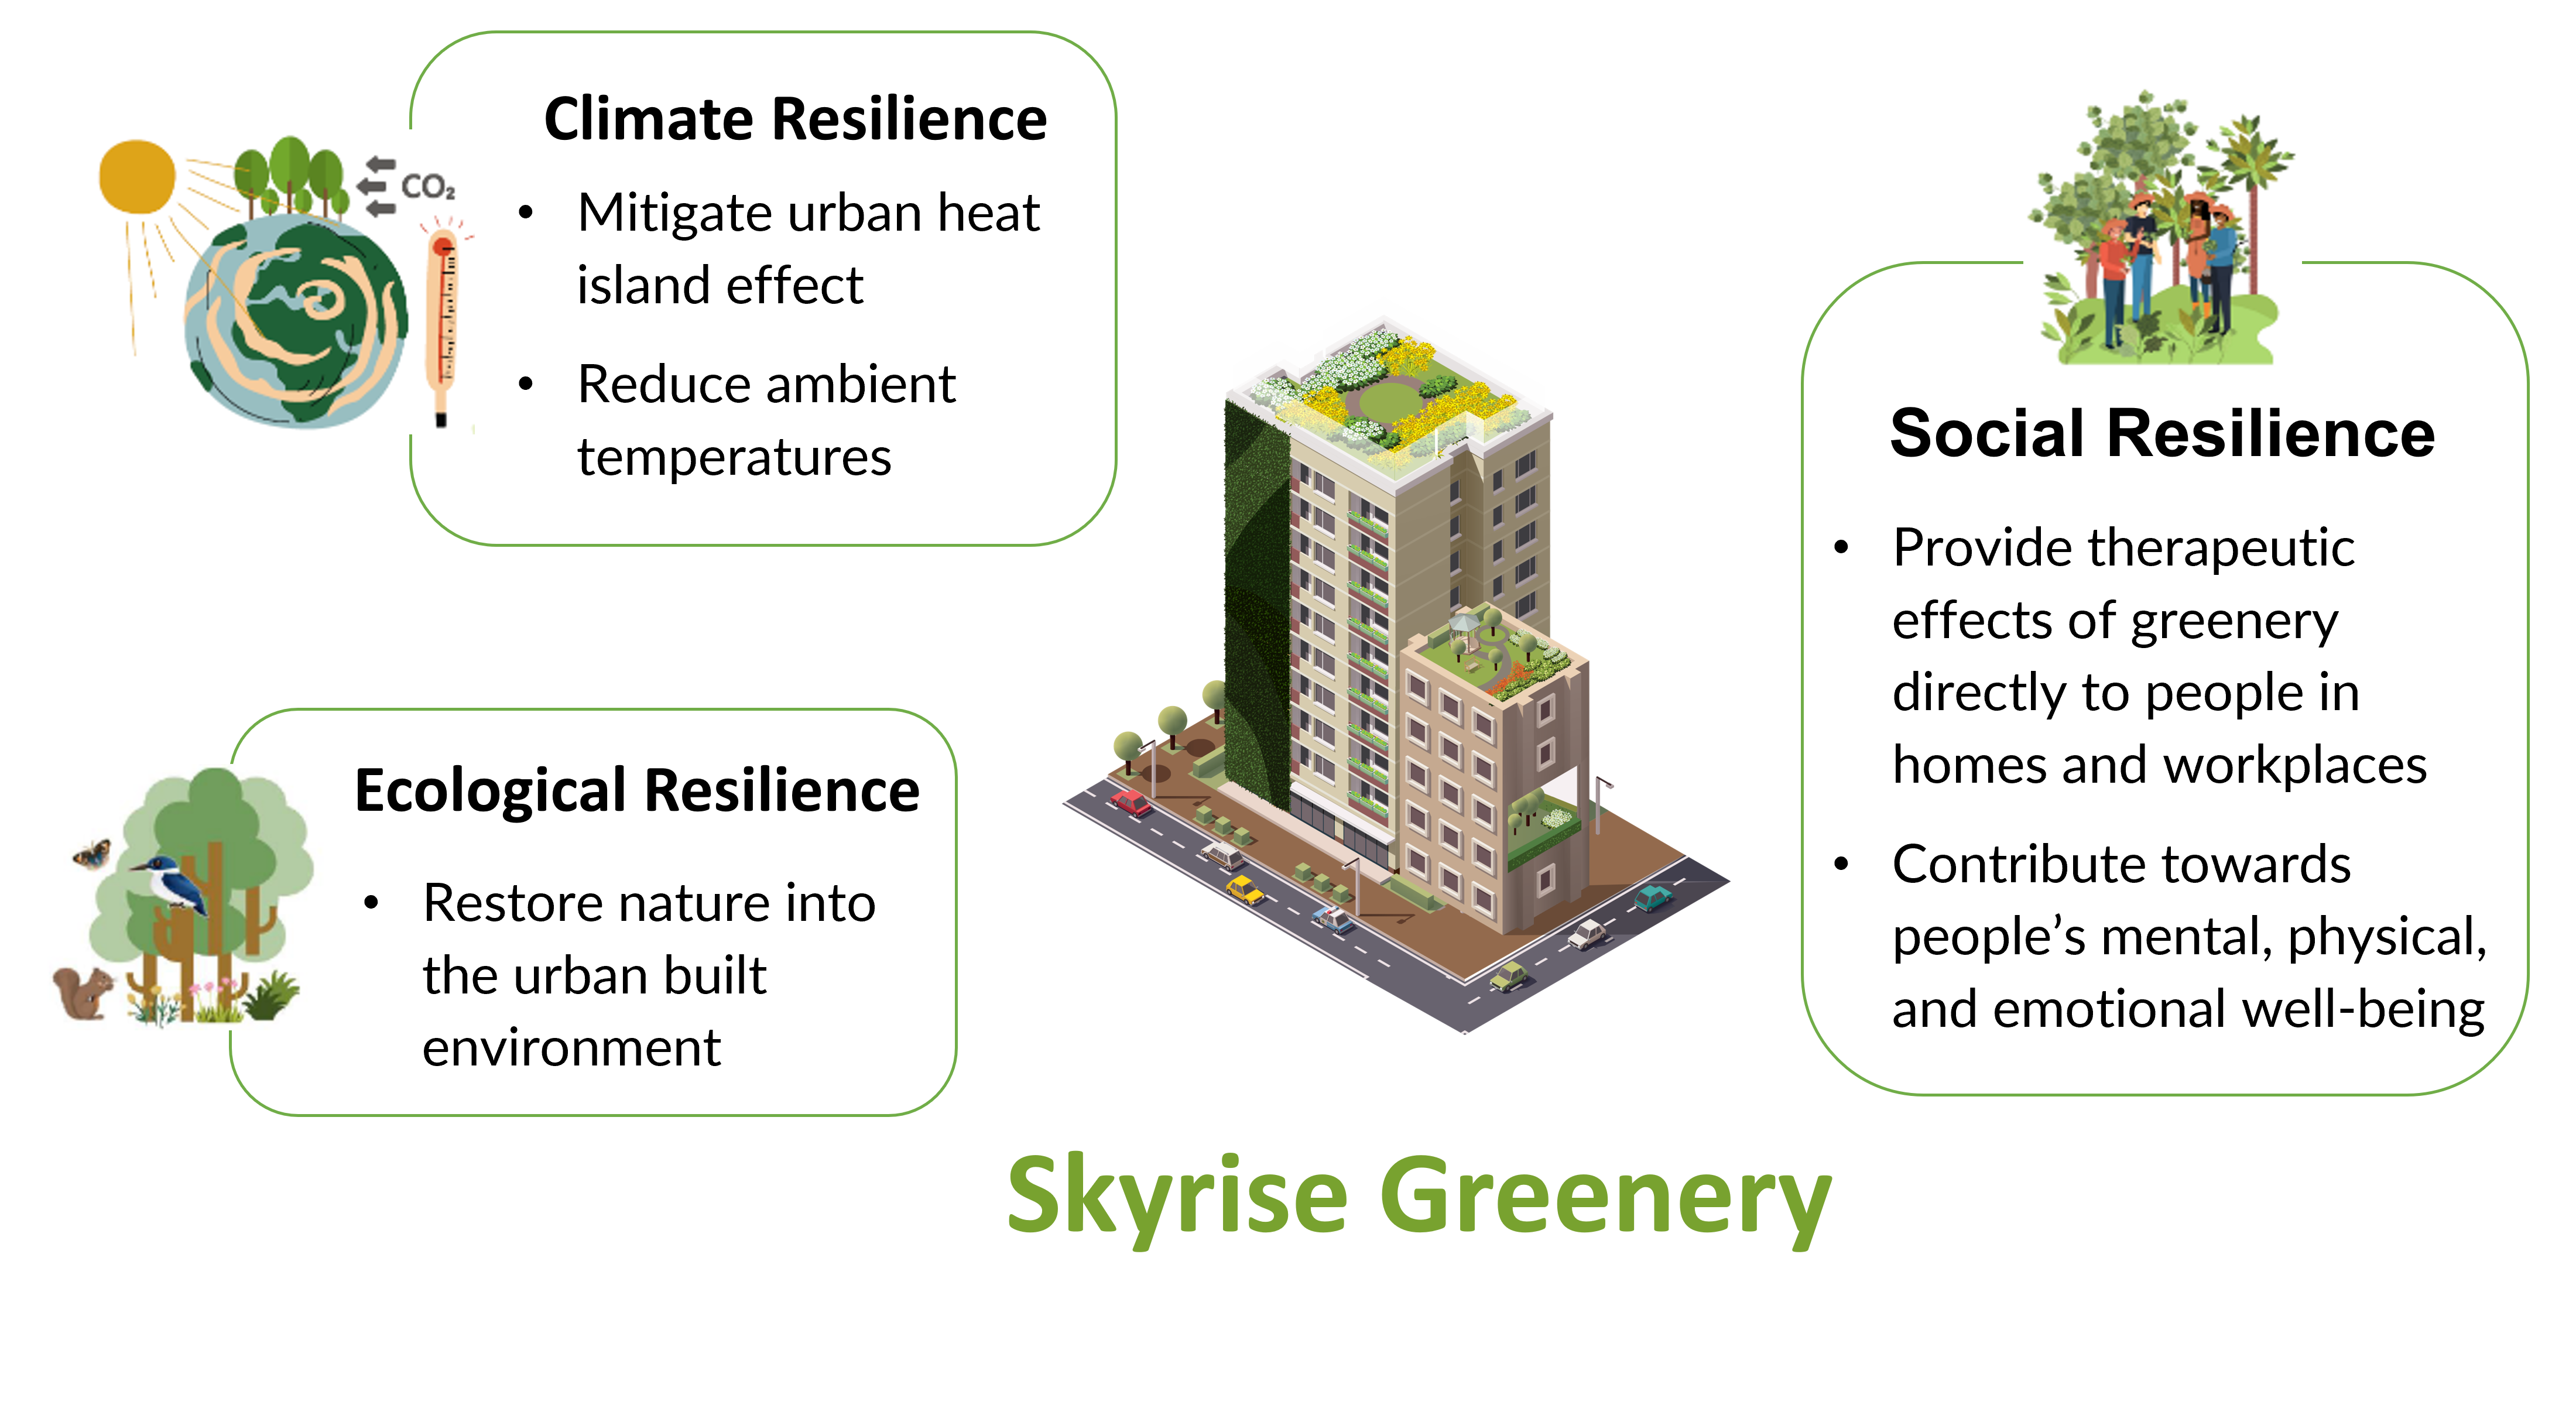 Skyrise Greenery